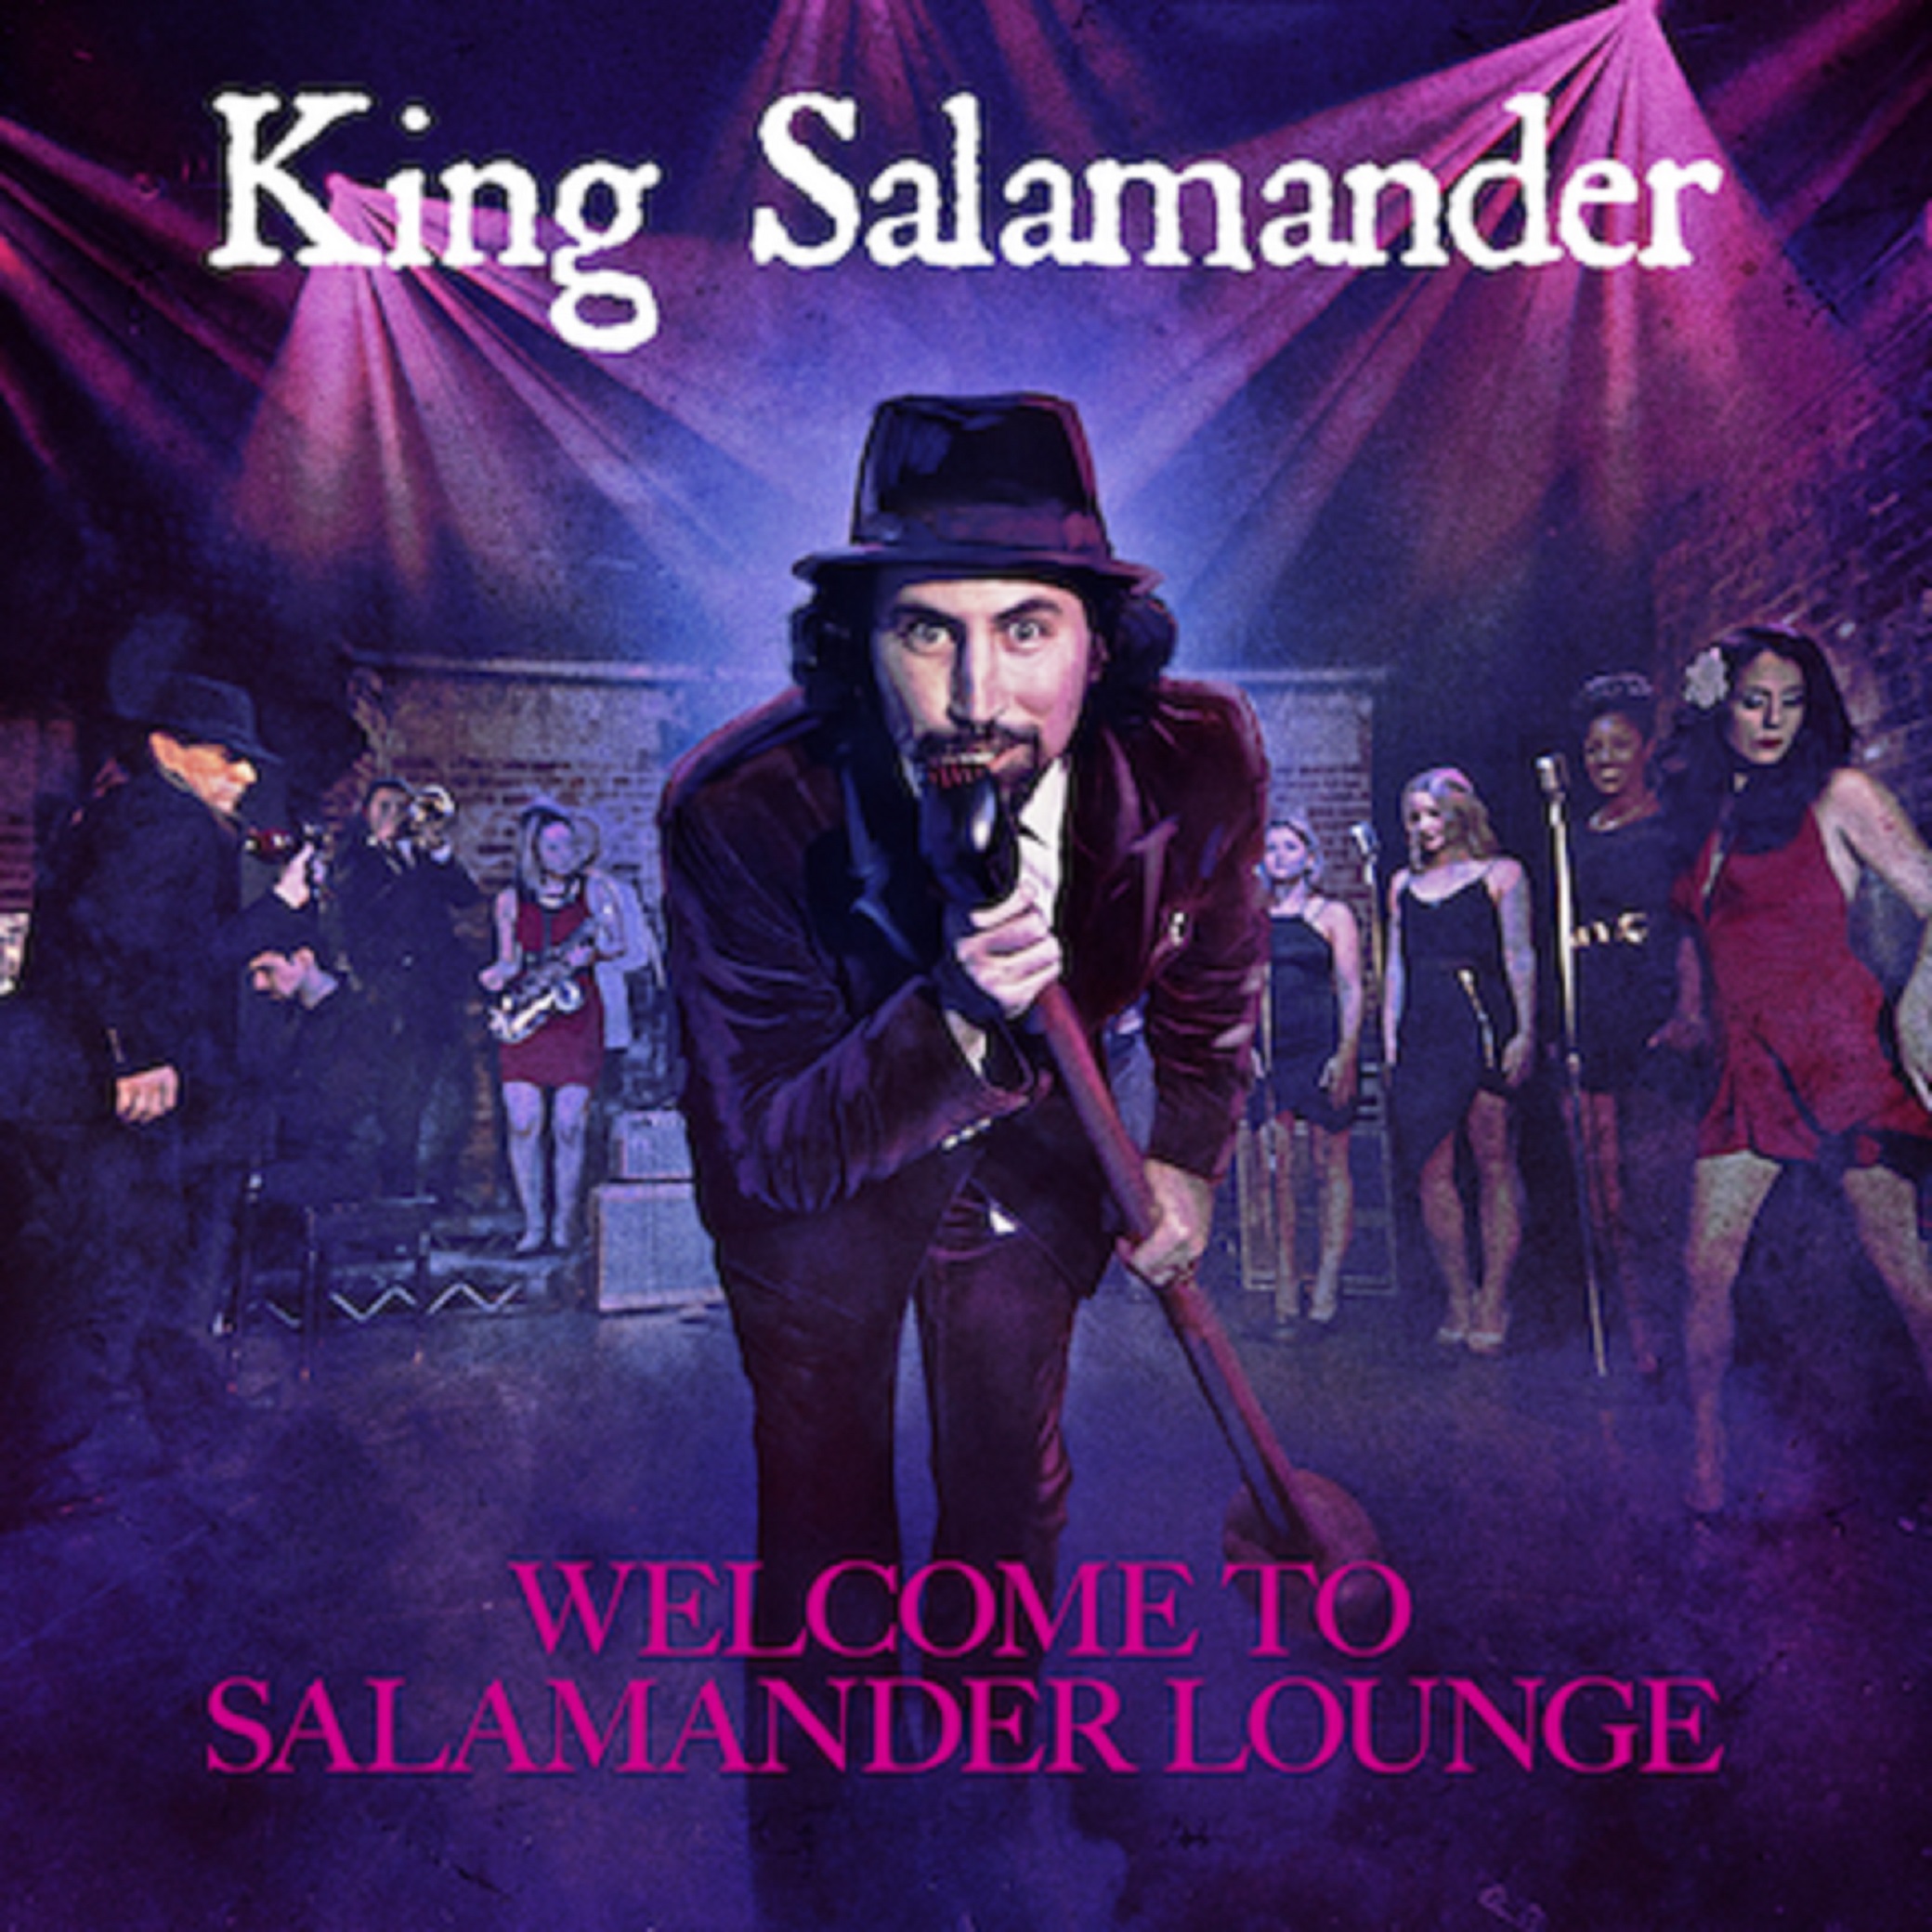 King Salamander Releases Debut Single “Welcome to Salamander Lounge”